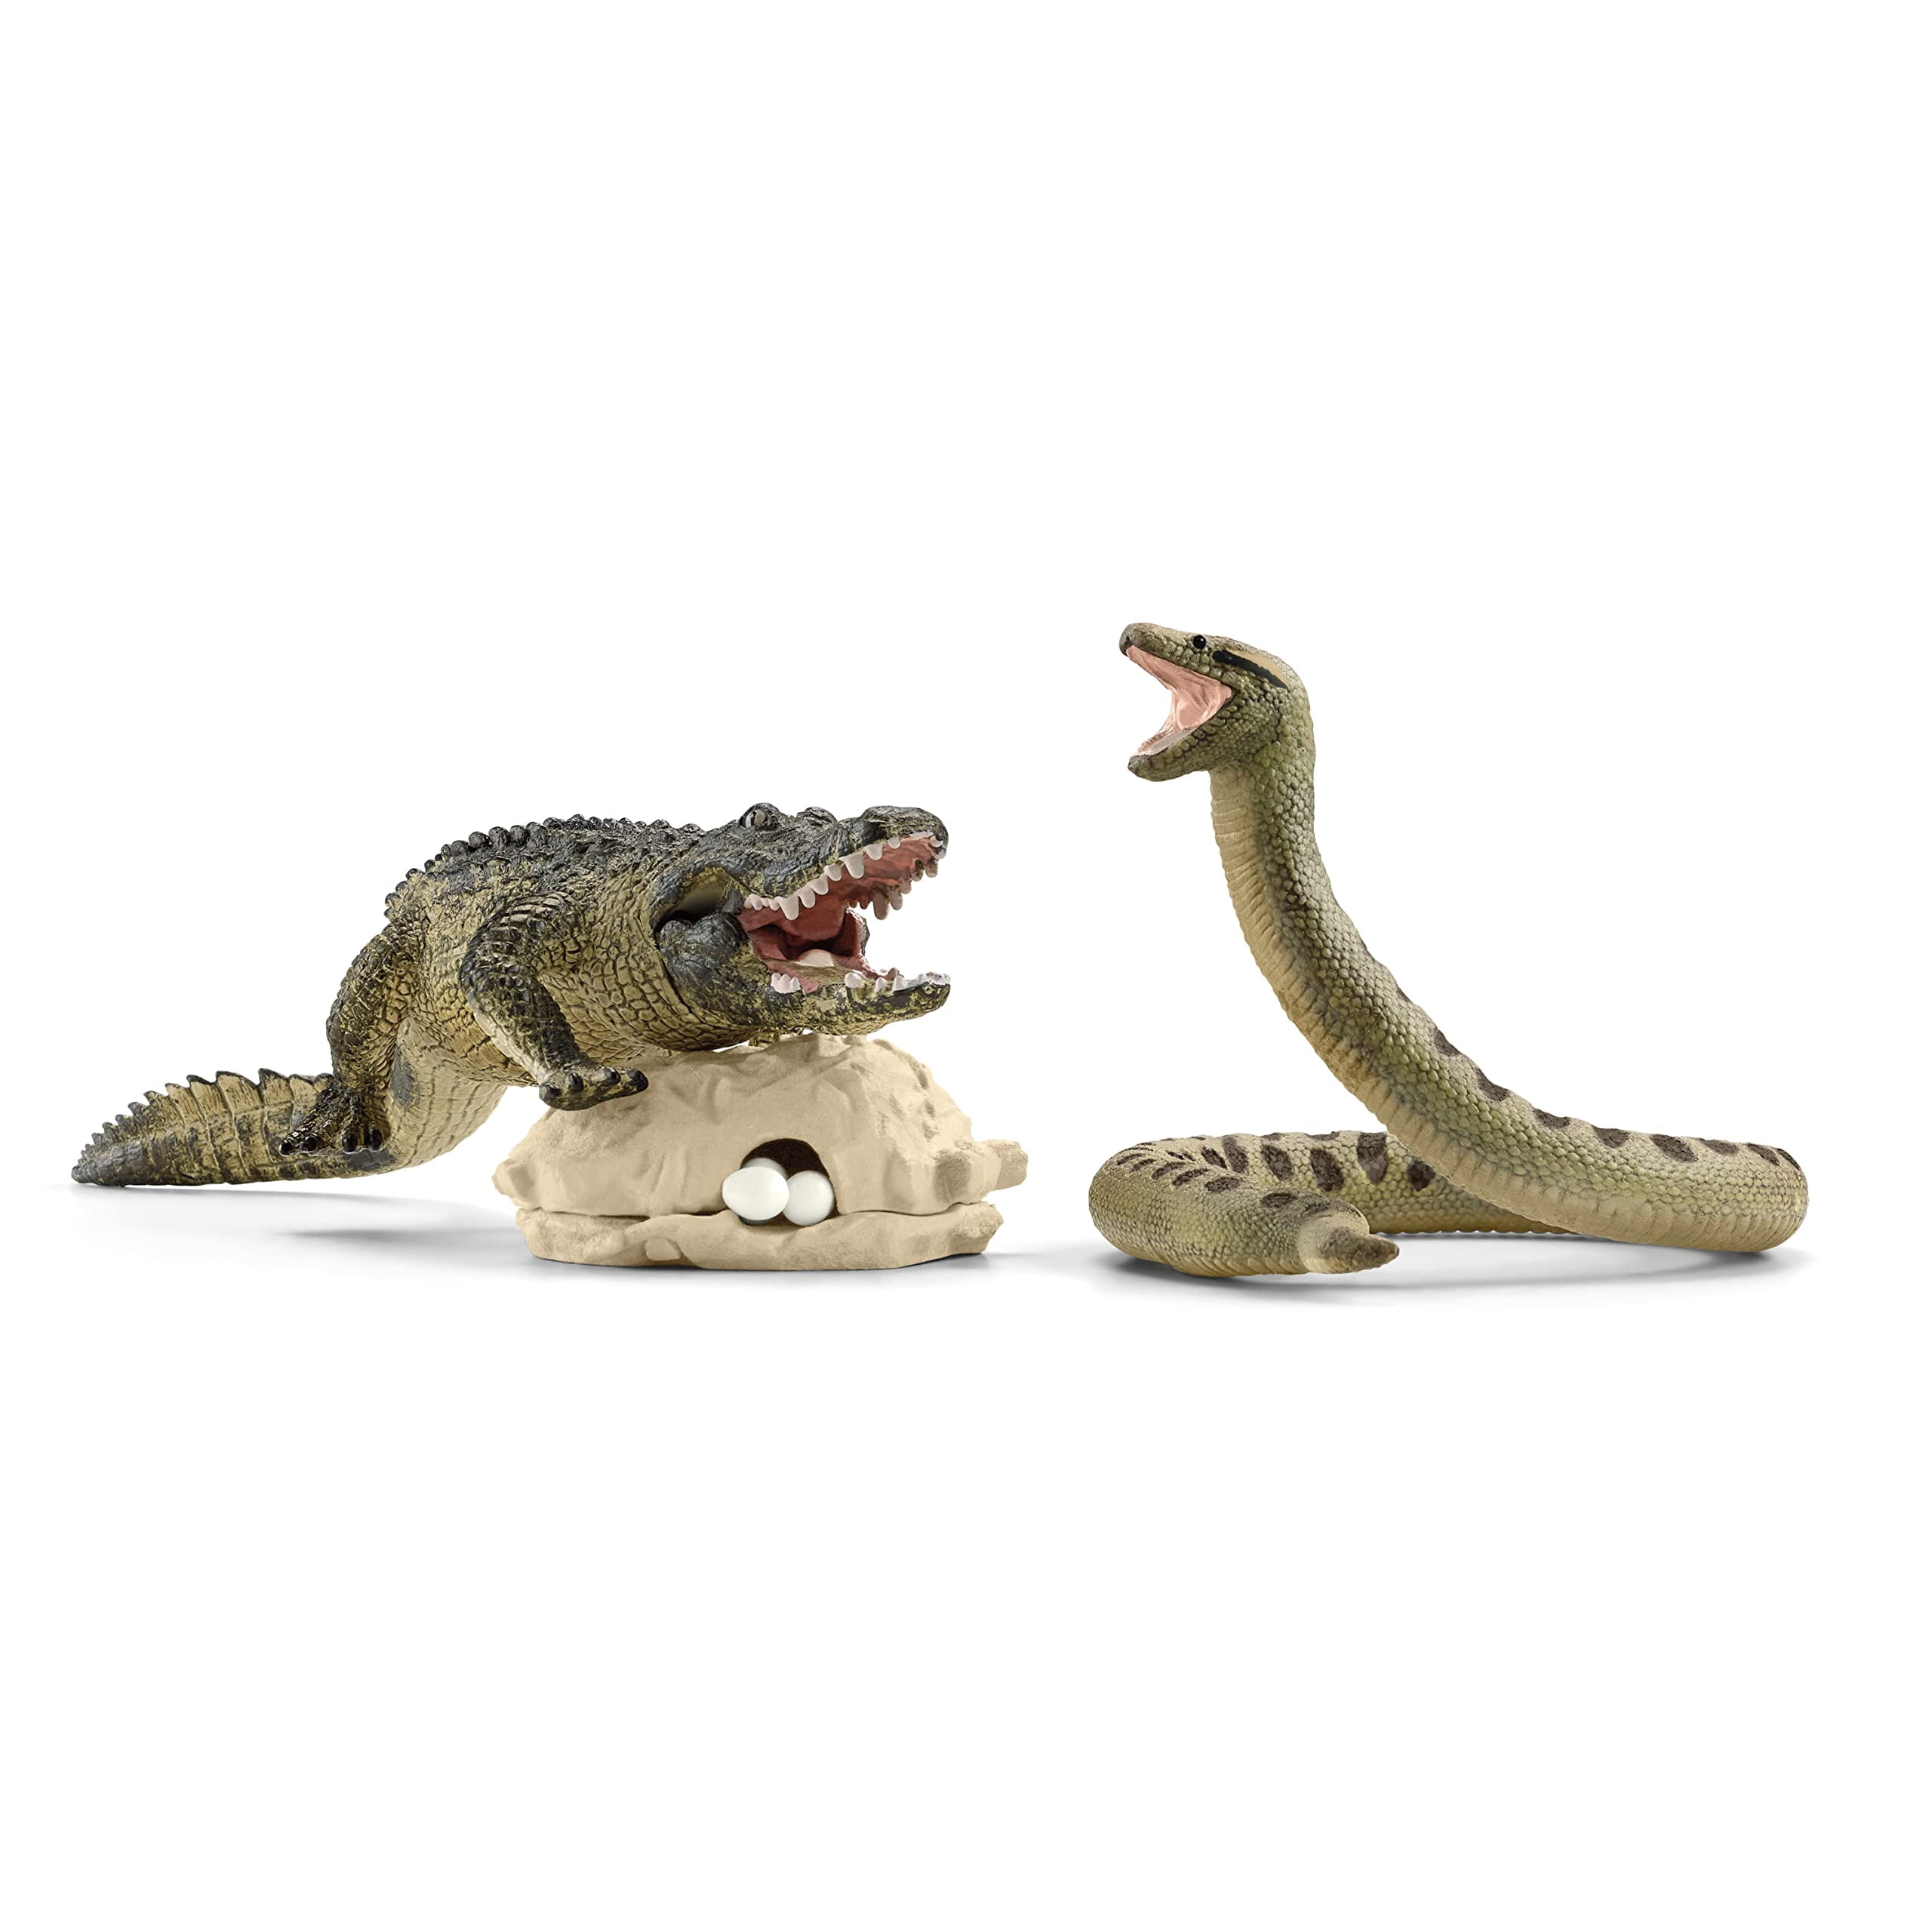 Schleich Wild Life, Animal Toys for Kids Ages 3+, 7-Piece Asian Animal  Figurine Set